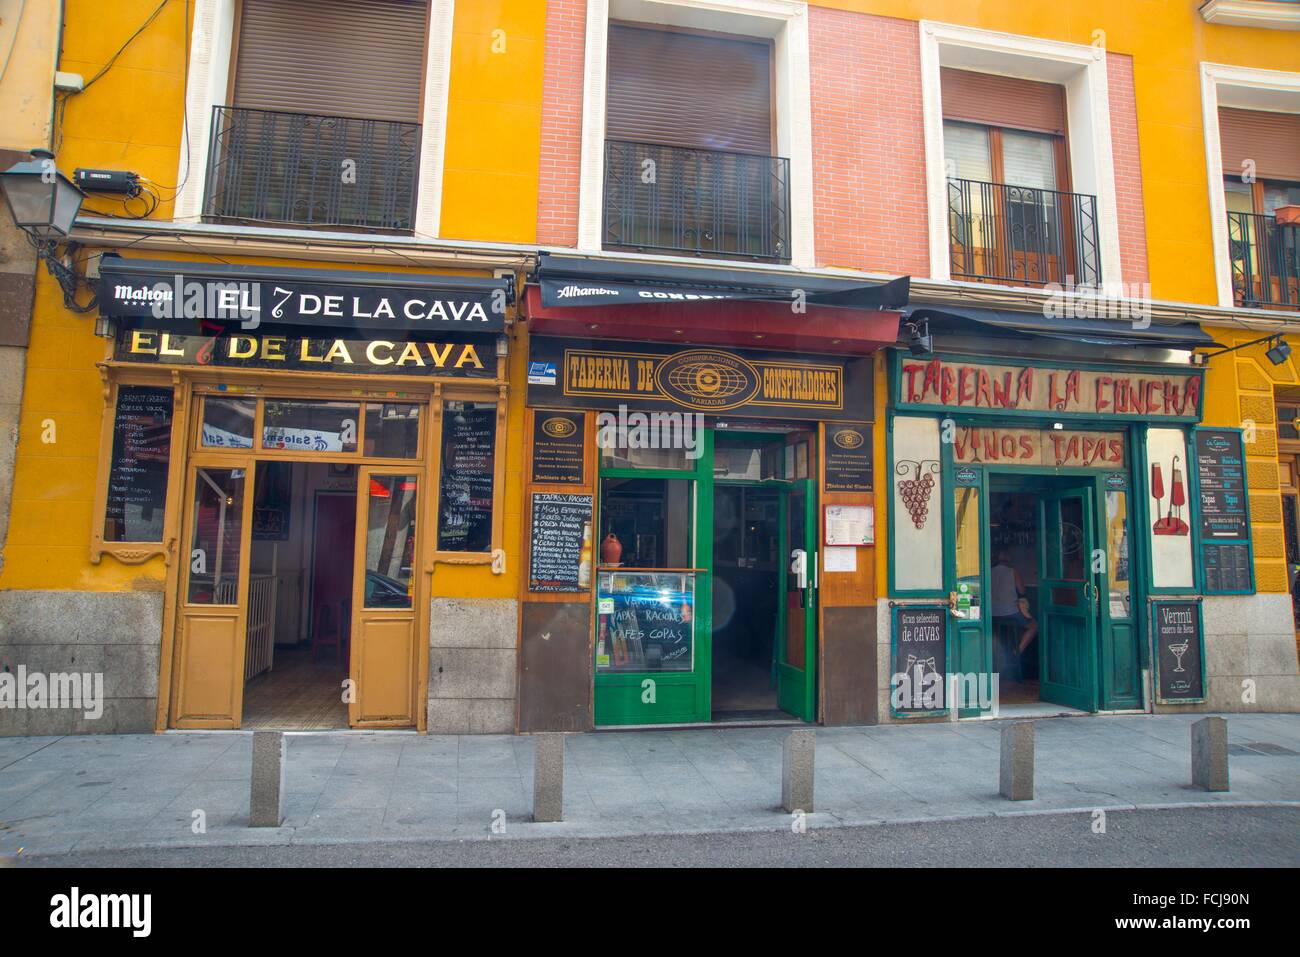 Facade of three typical taverns. Cava Baja street, Madrid, Spain. Stock Photo